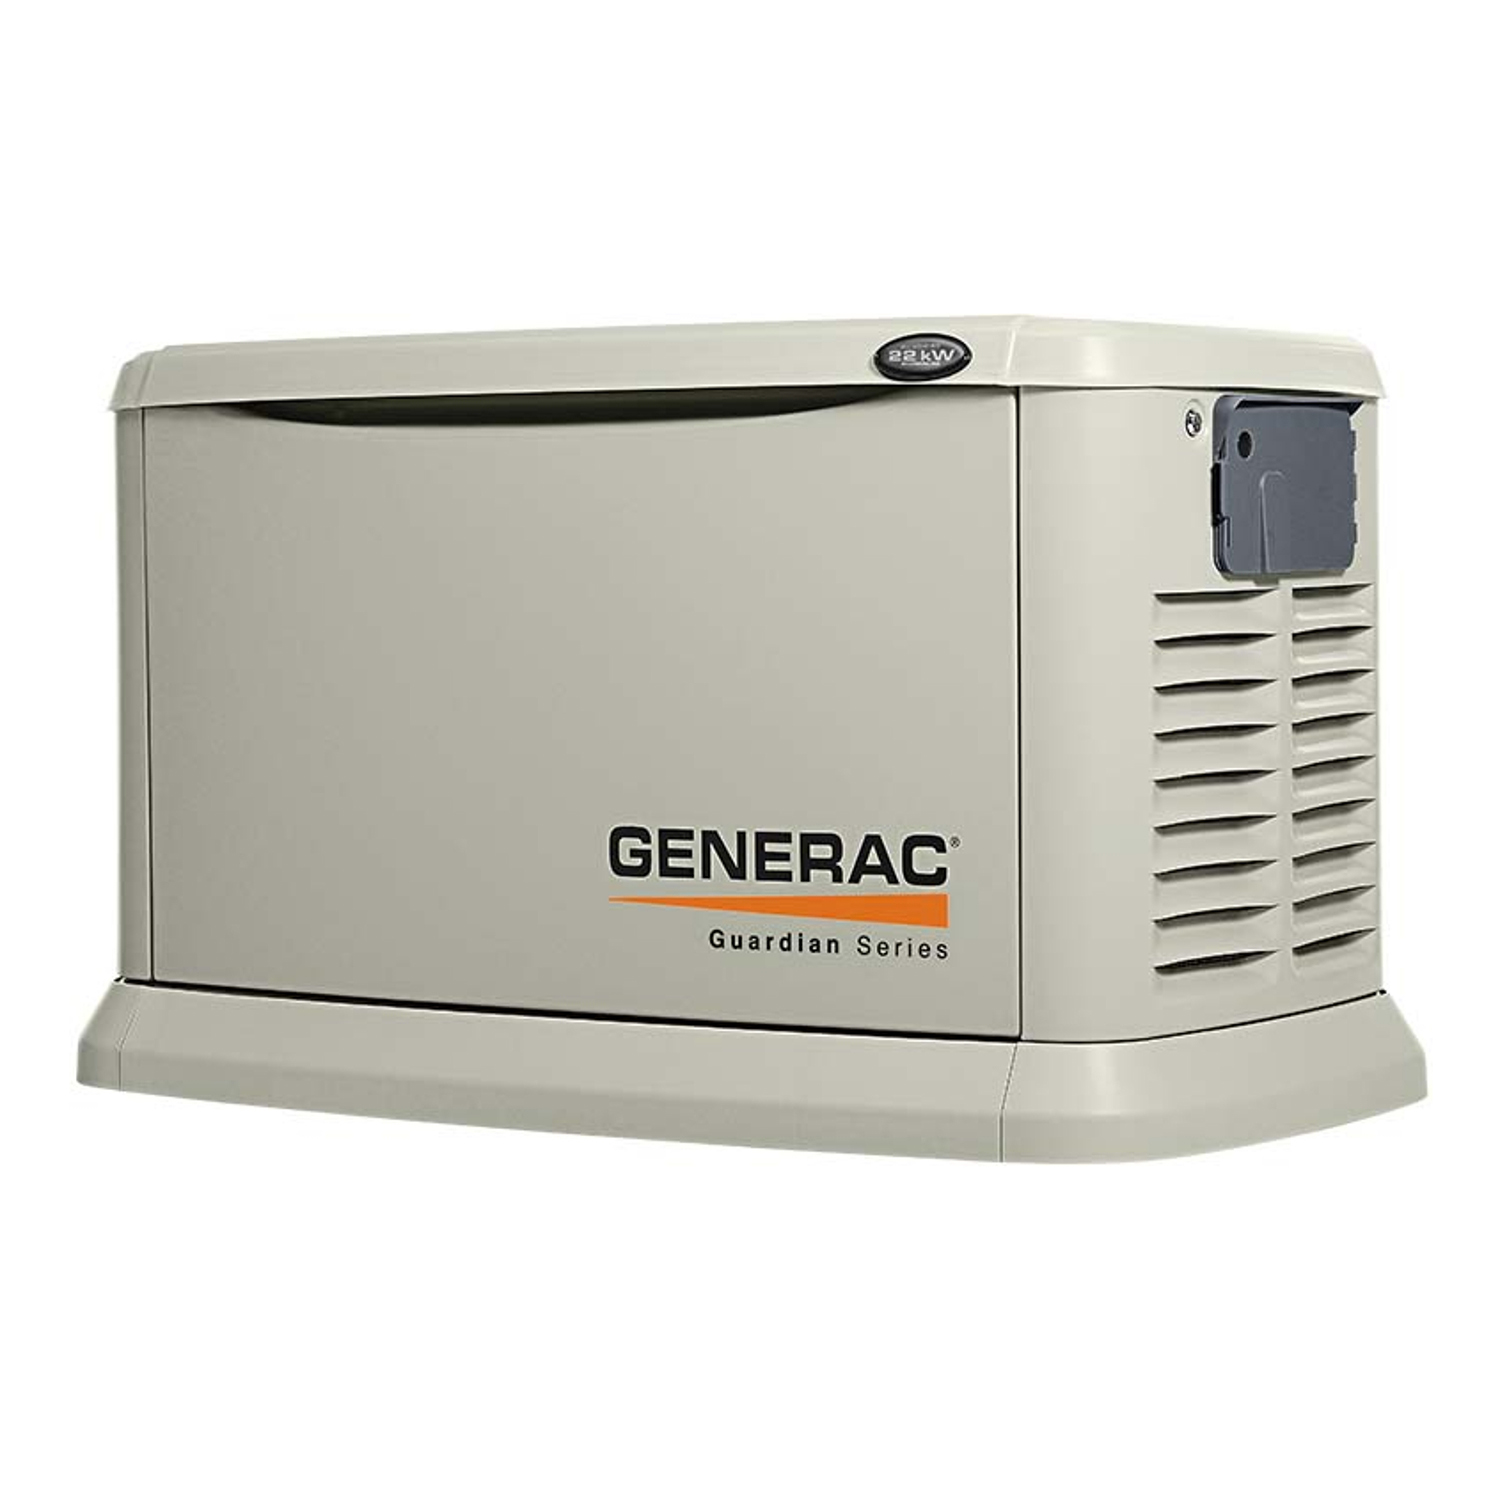 22kw Generac Generator 6552